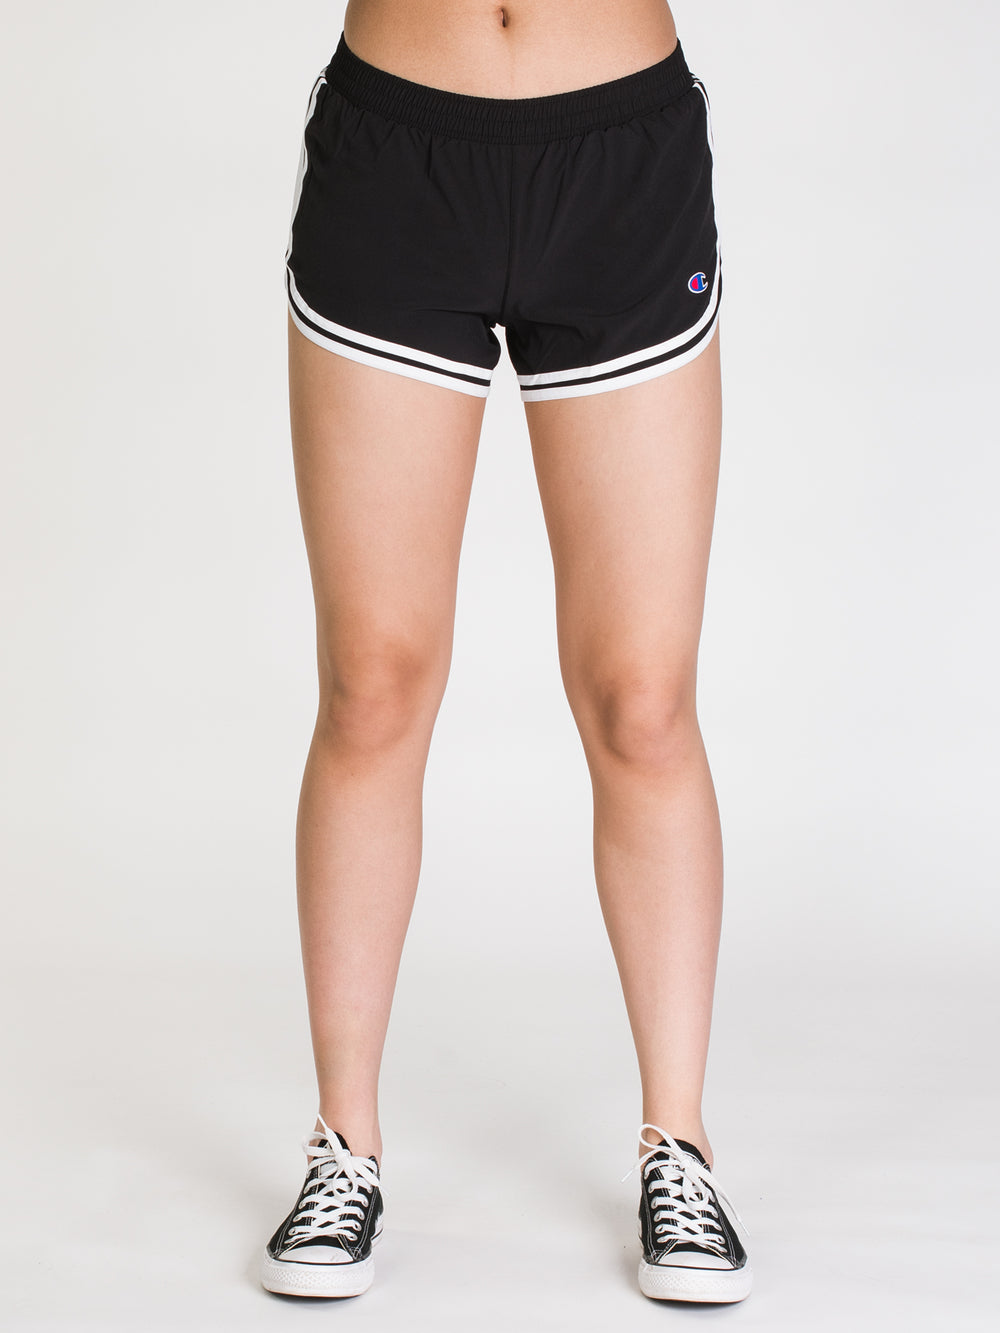 V3 Apparel Womens Limitless Seamless Workout Shorts - Black - Gym, Running,  Yoga Tights